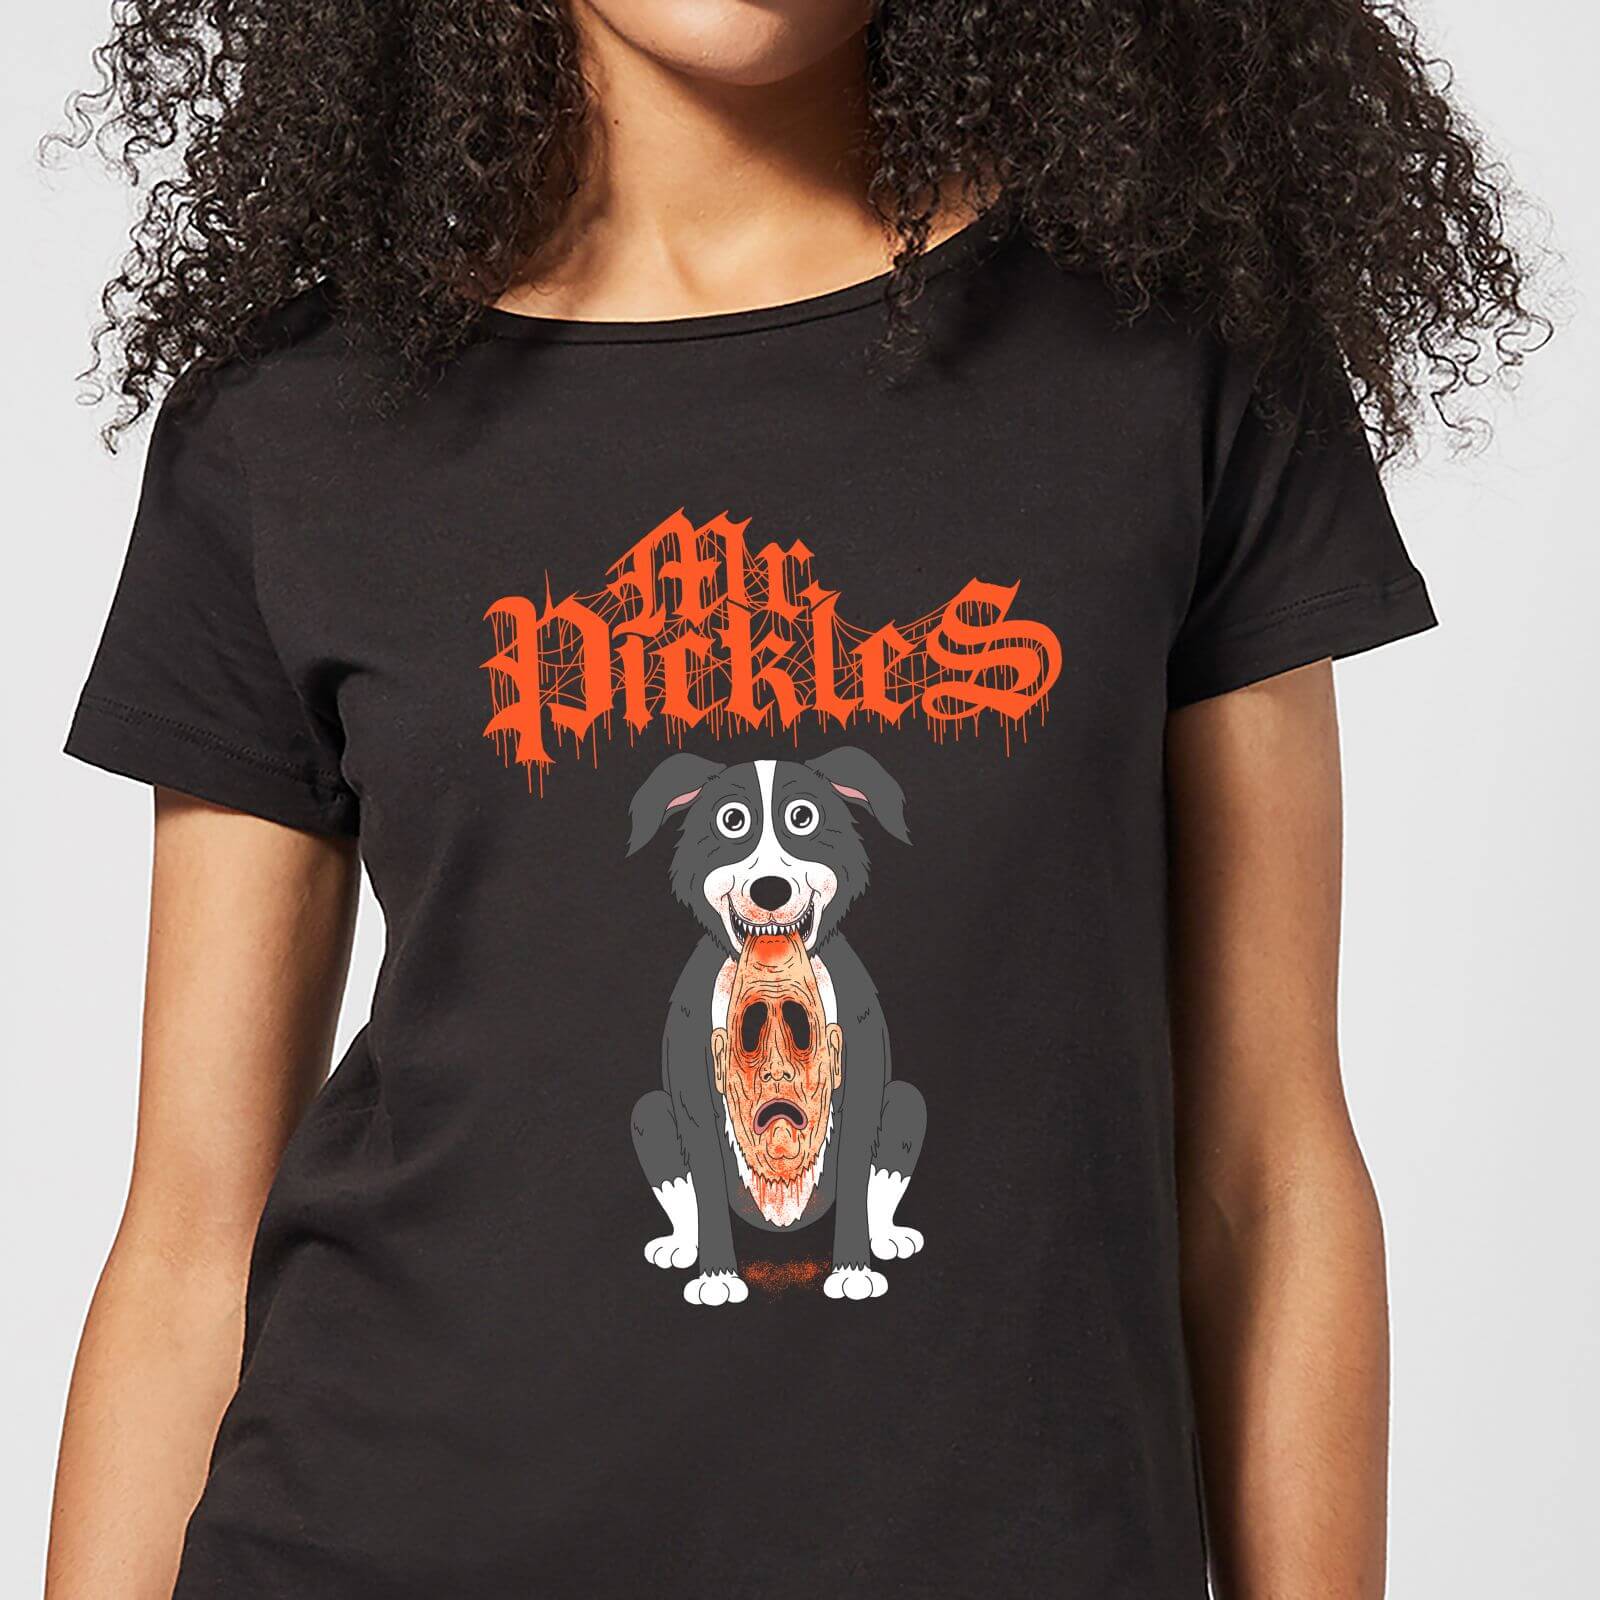 Mr Pickles Ripped Face Women's T-Shirt - Black - S - Black